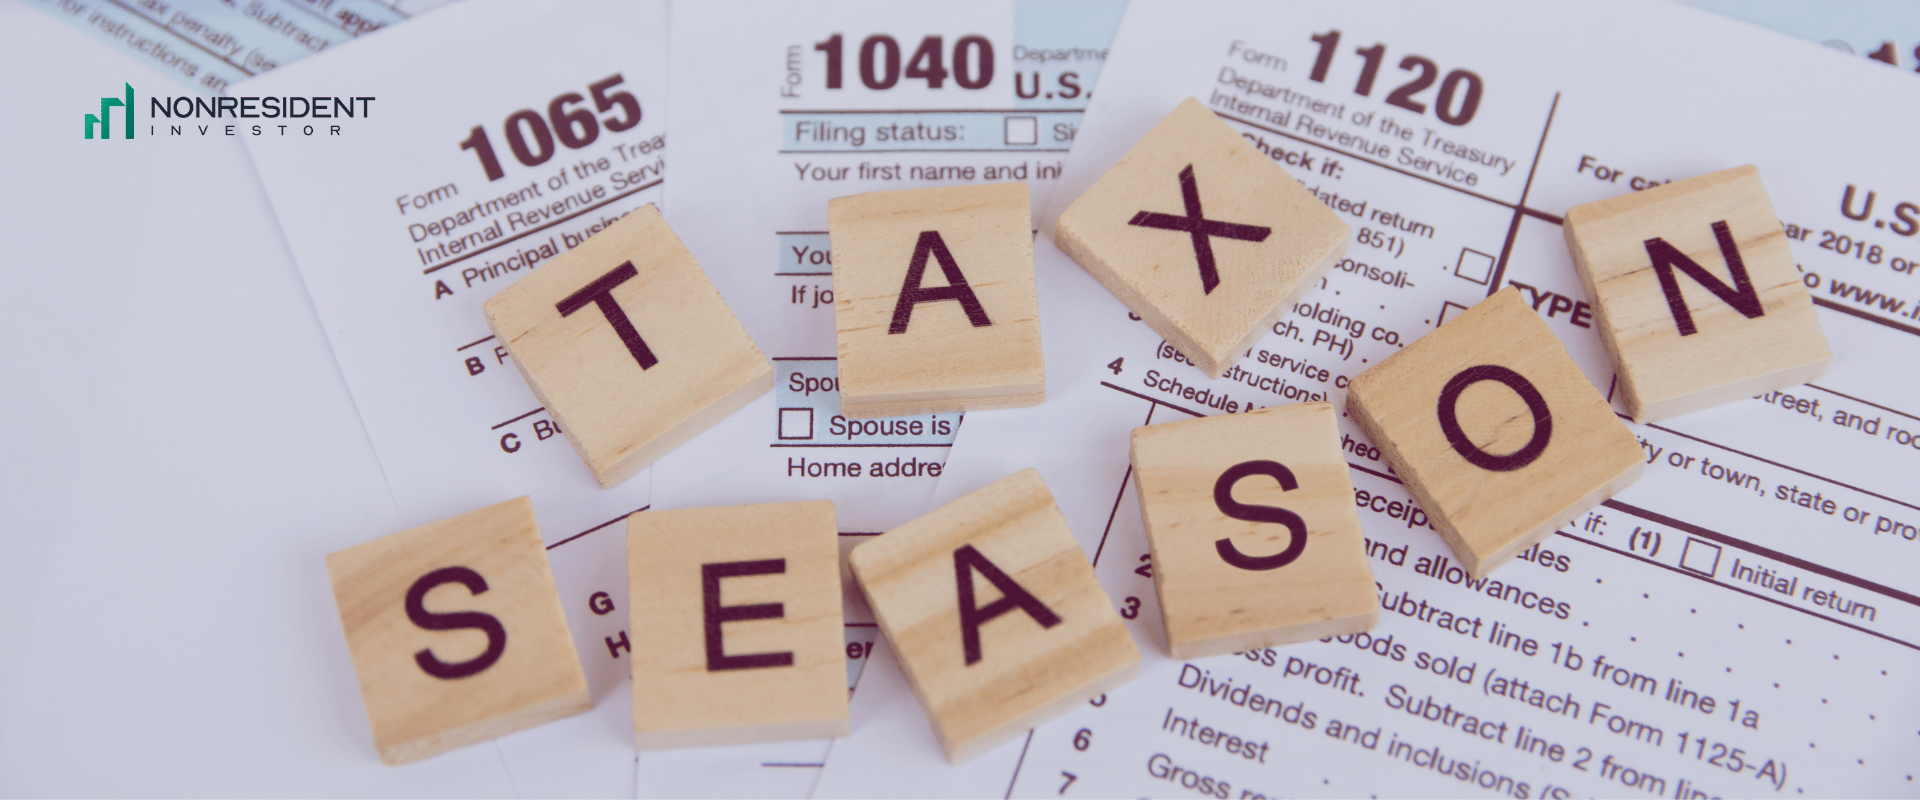 tax season for filling 1040-NR form